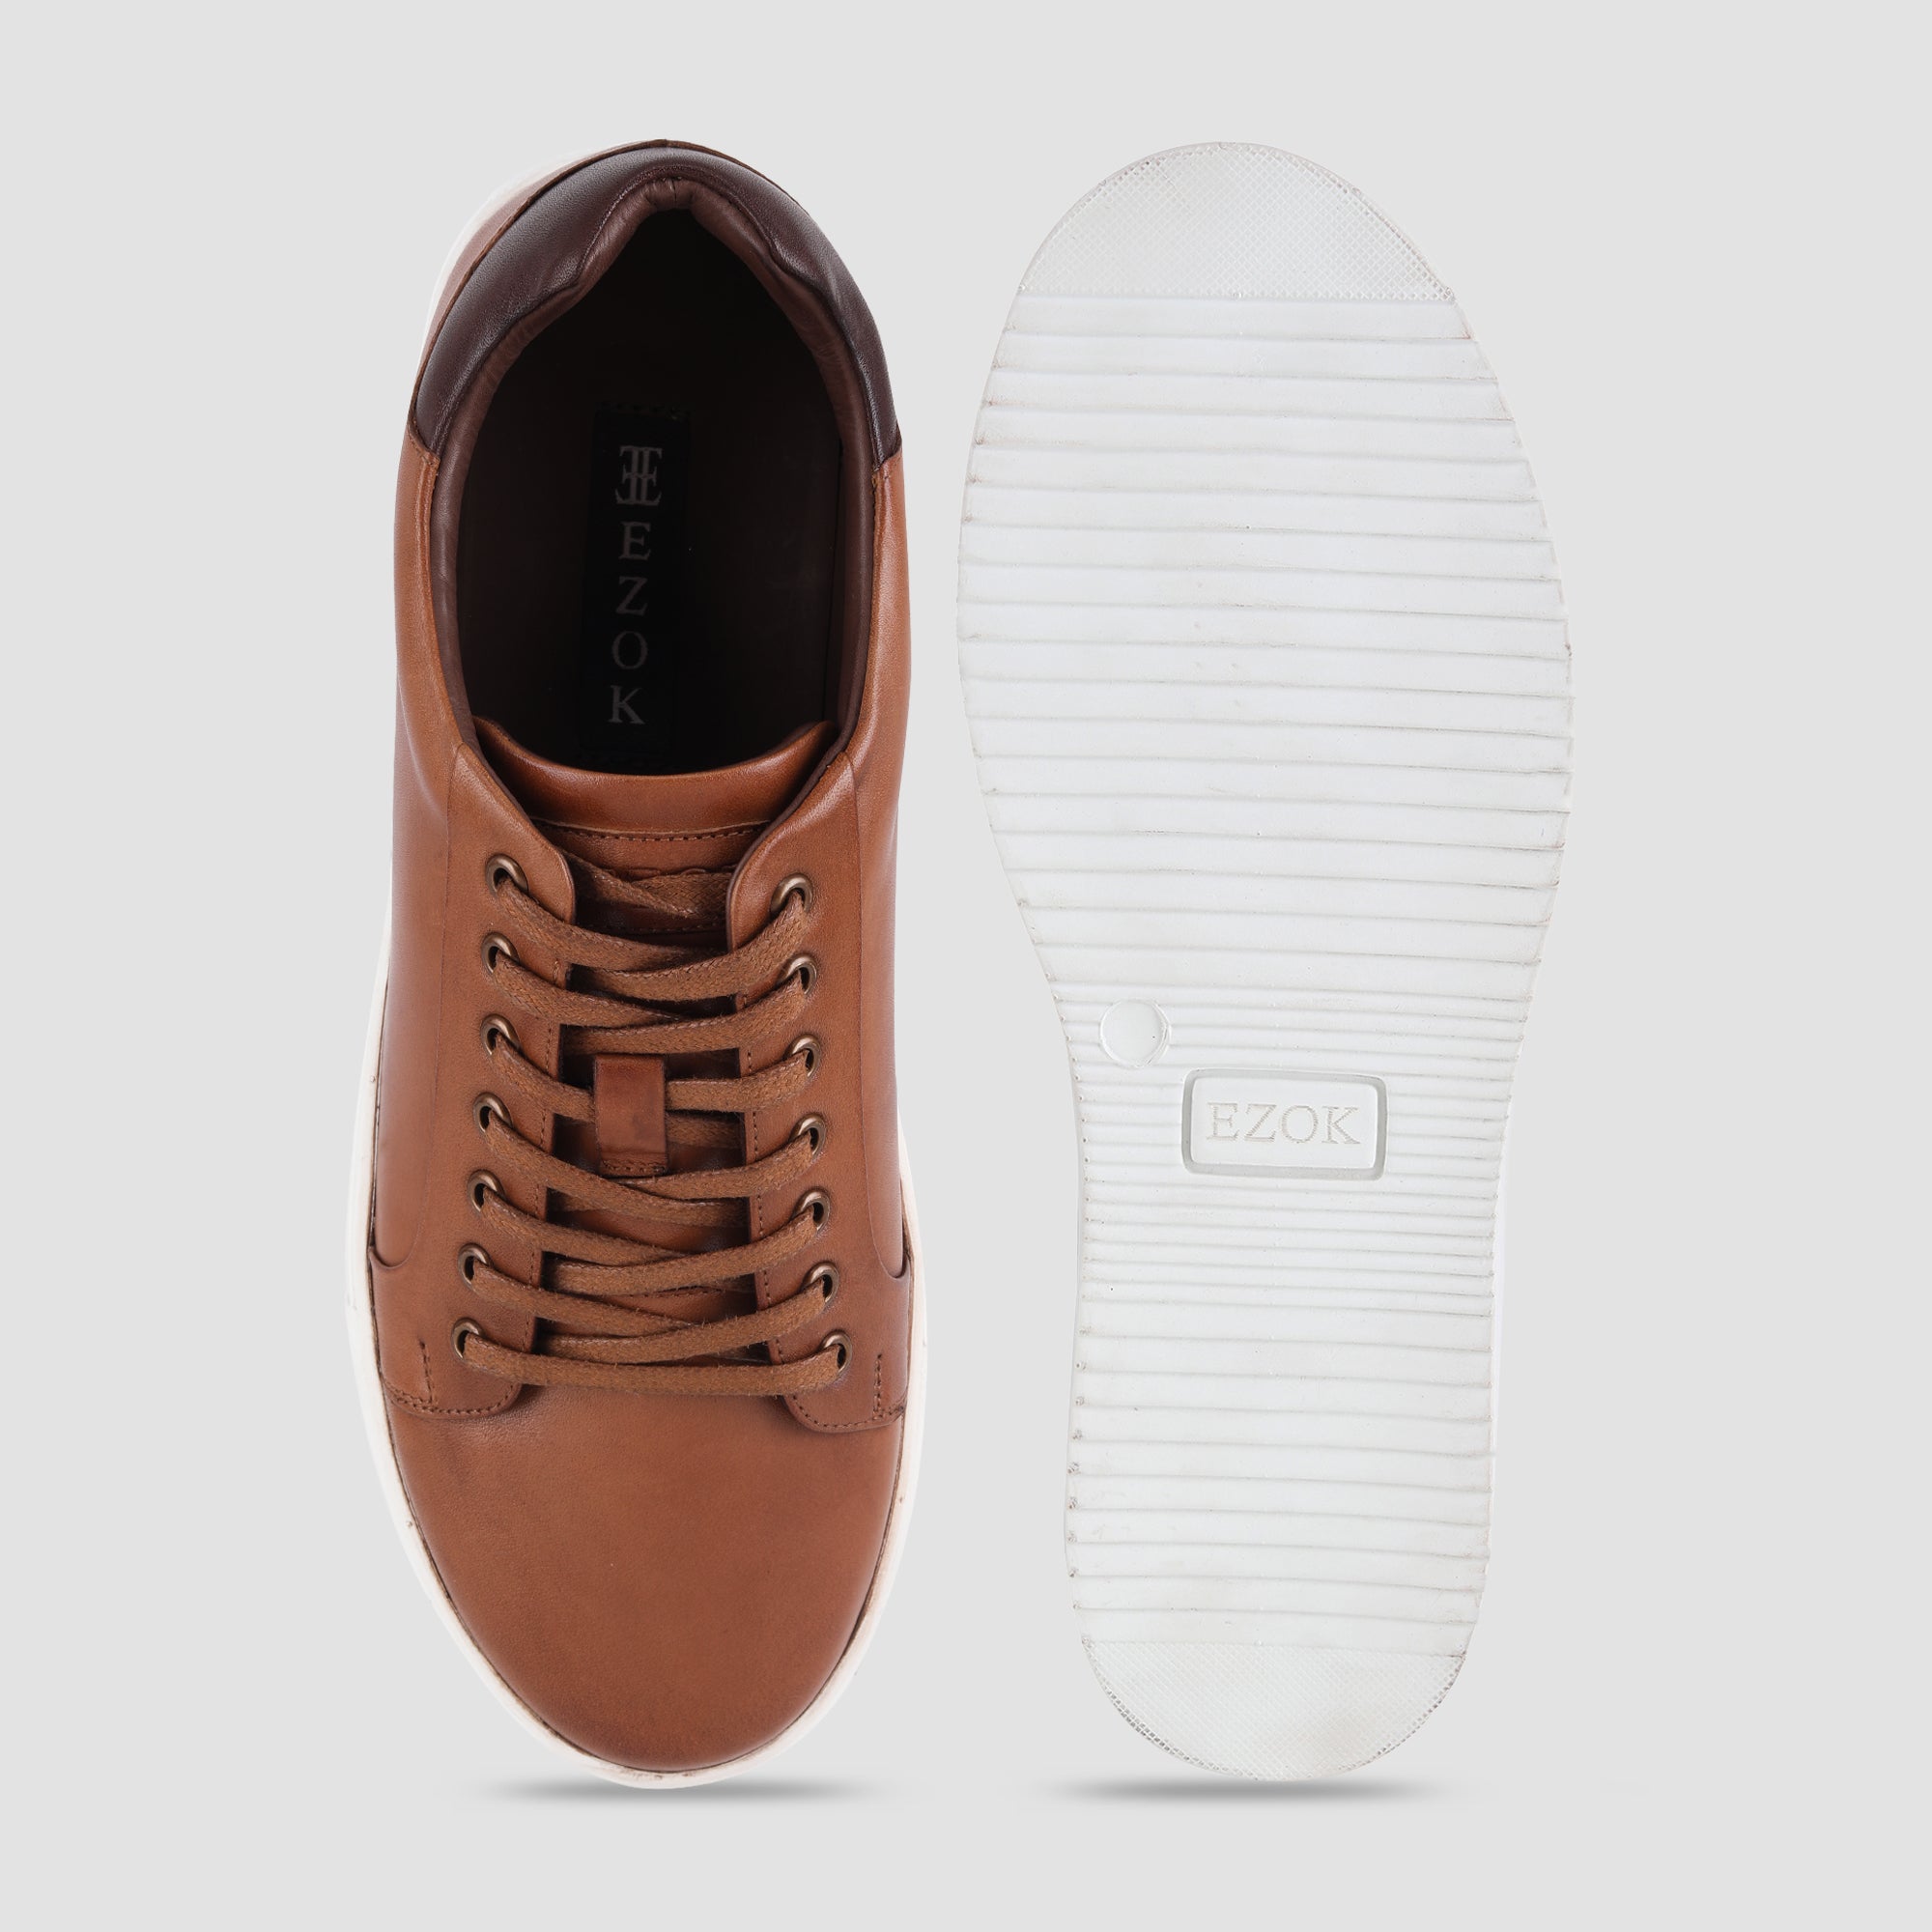 Ezok Tan Leather Sneaker For Men